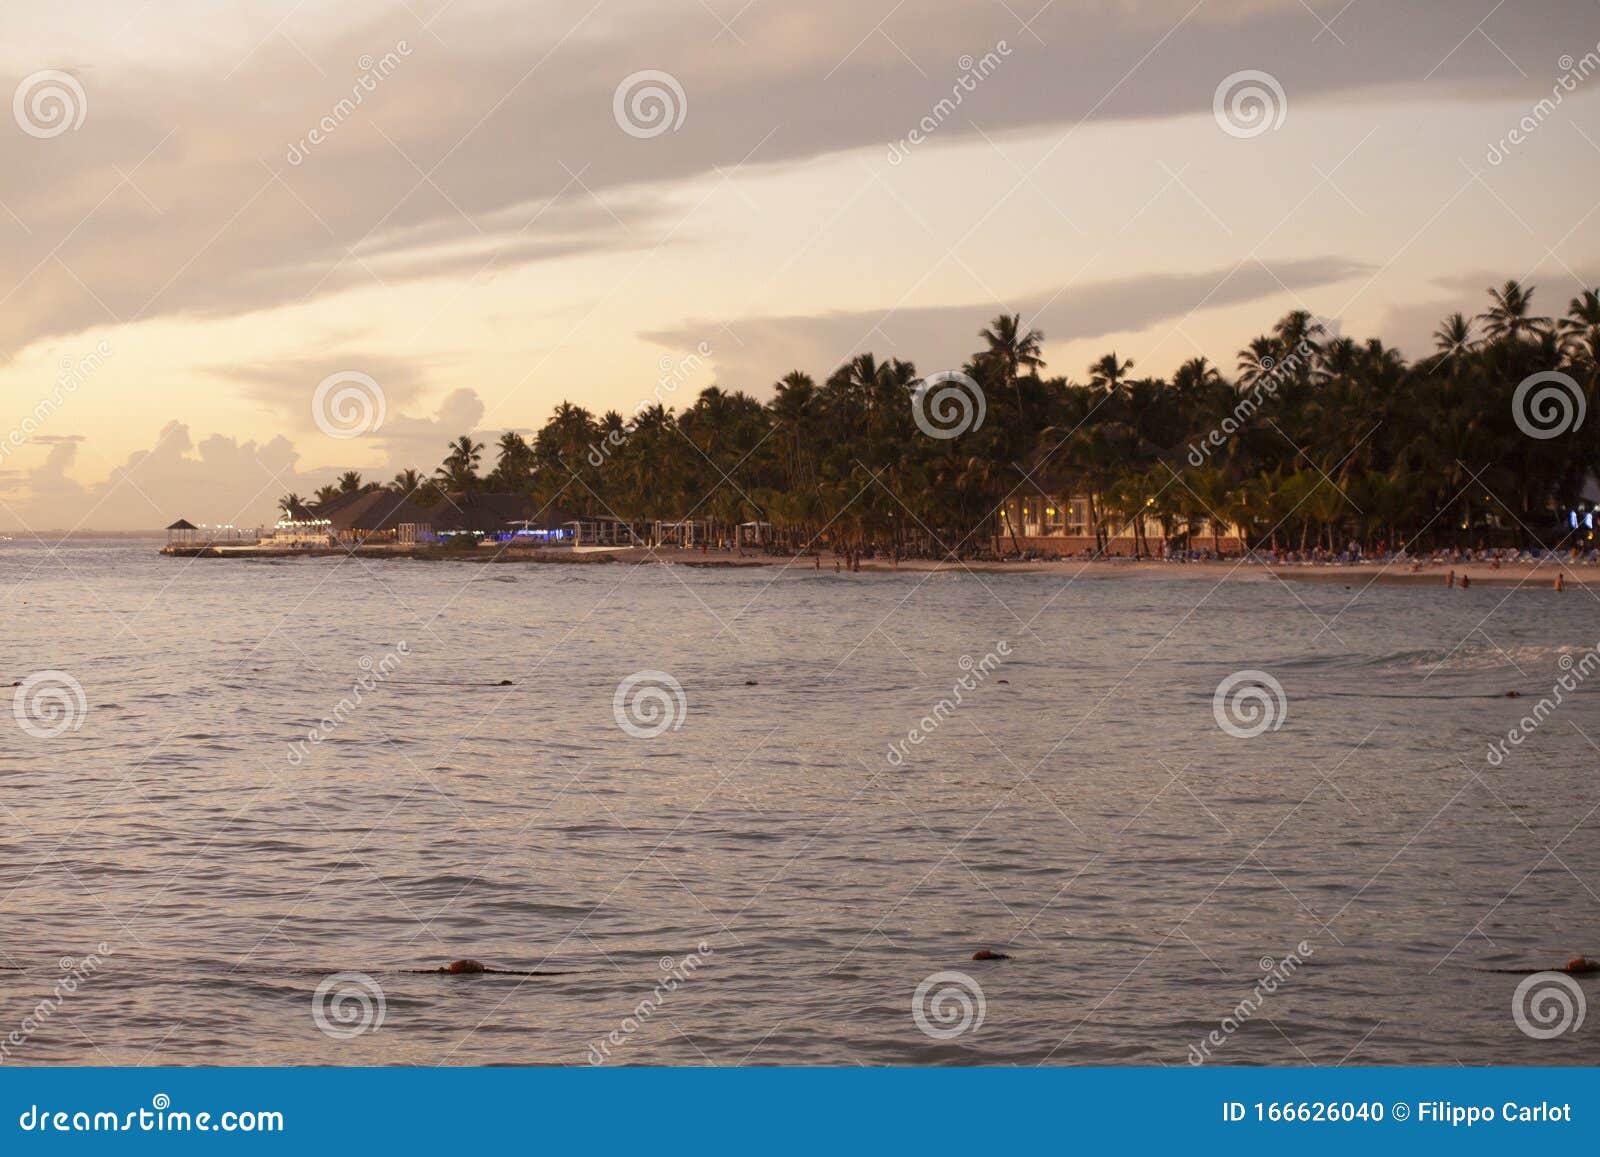 dominicus shoreline at sunset